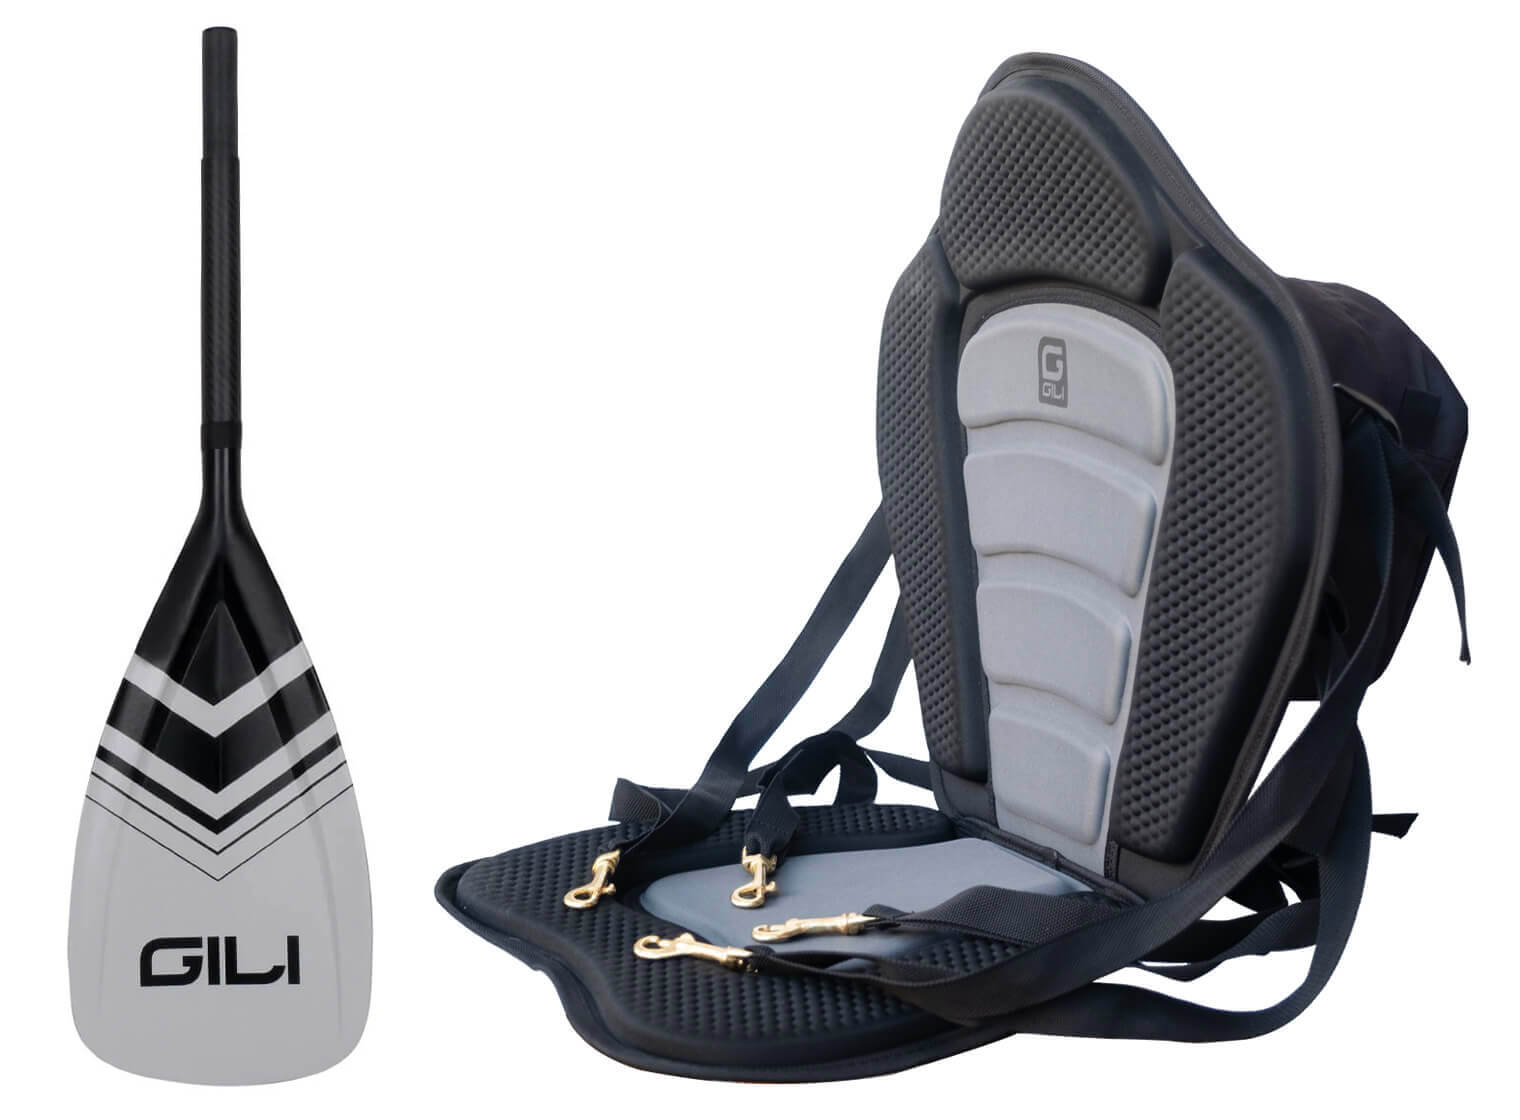 Vashly Kayak Seat, Detachable Universal Paddle Board Seat for